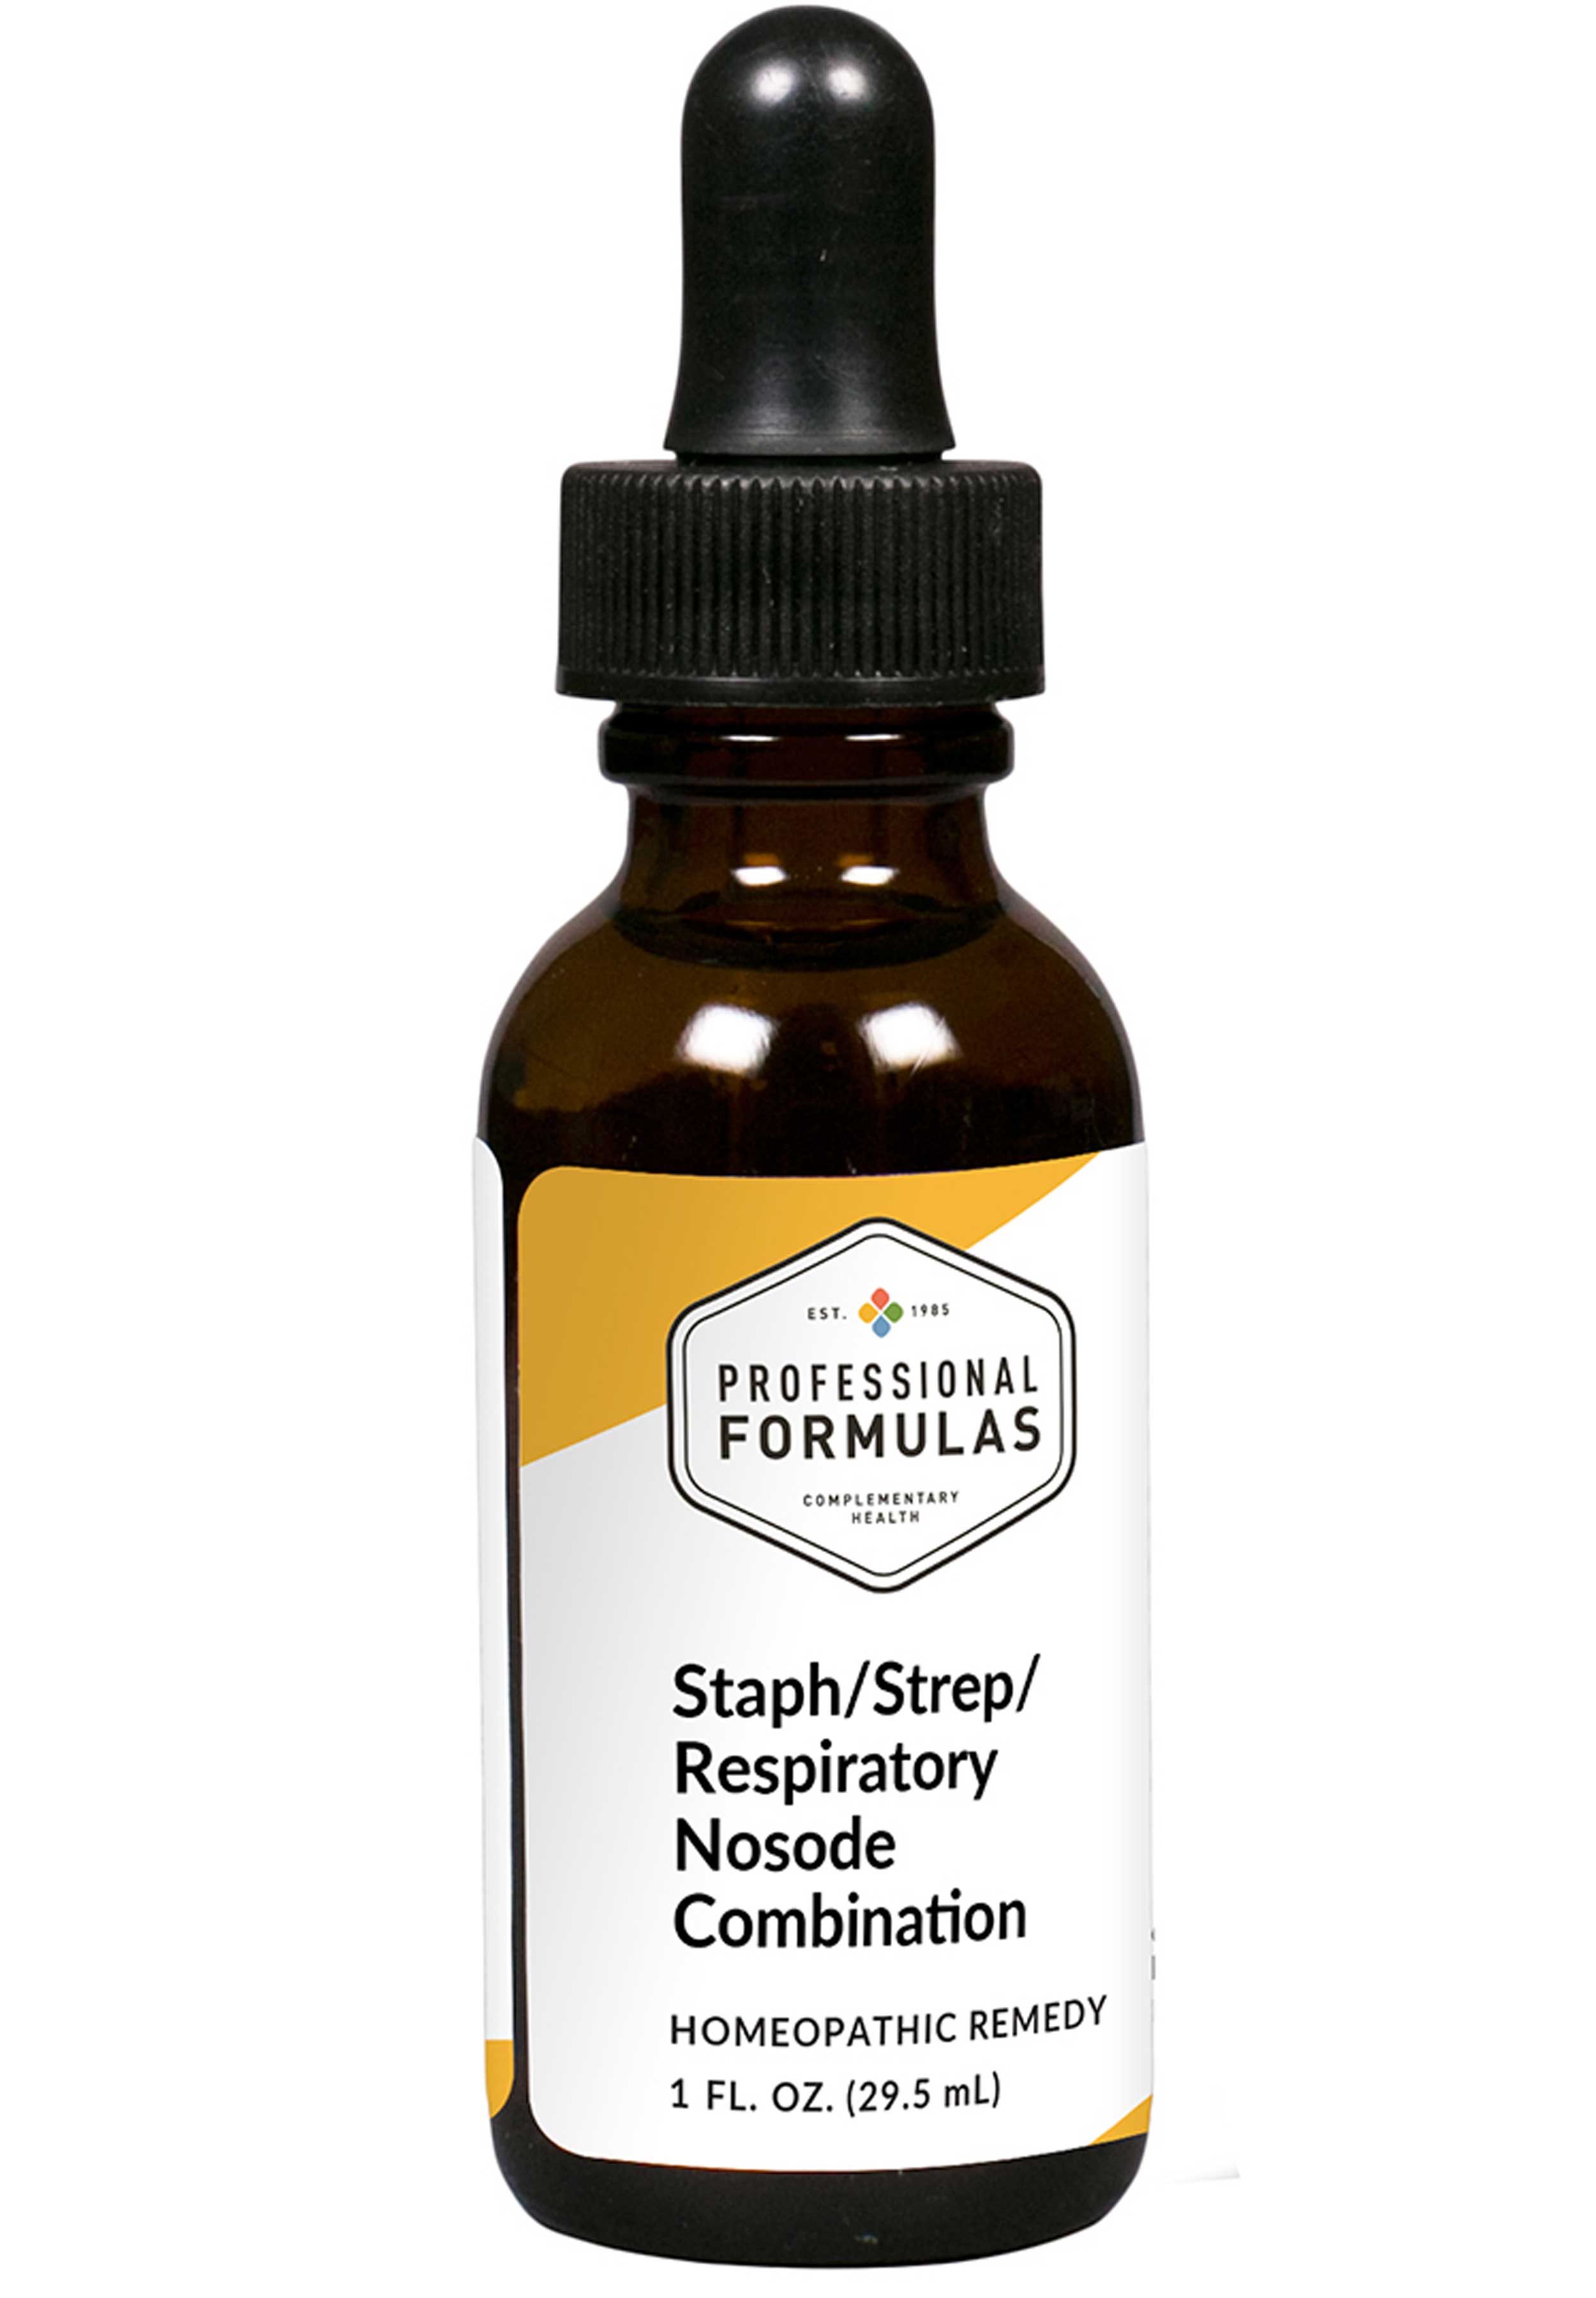 Professional Formulas Staph/Strep Respiratory